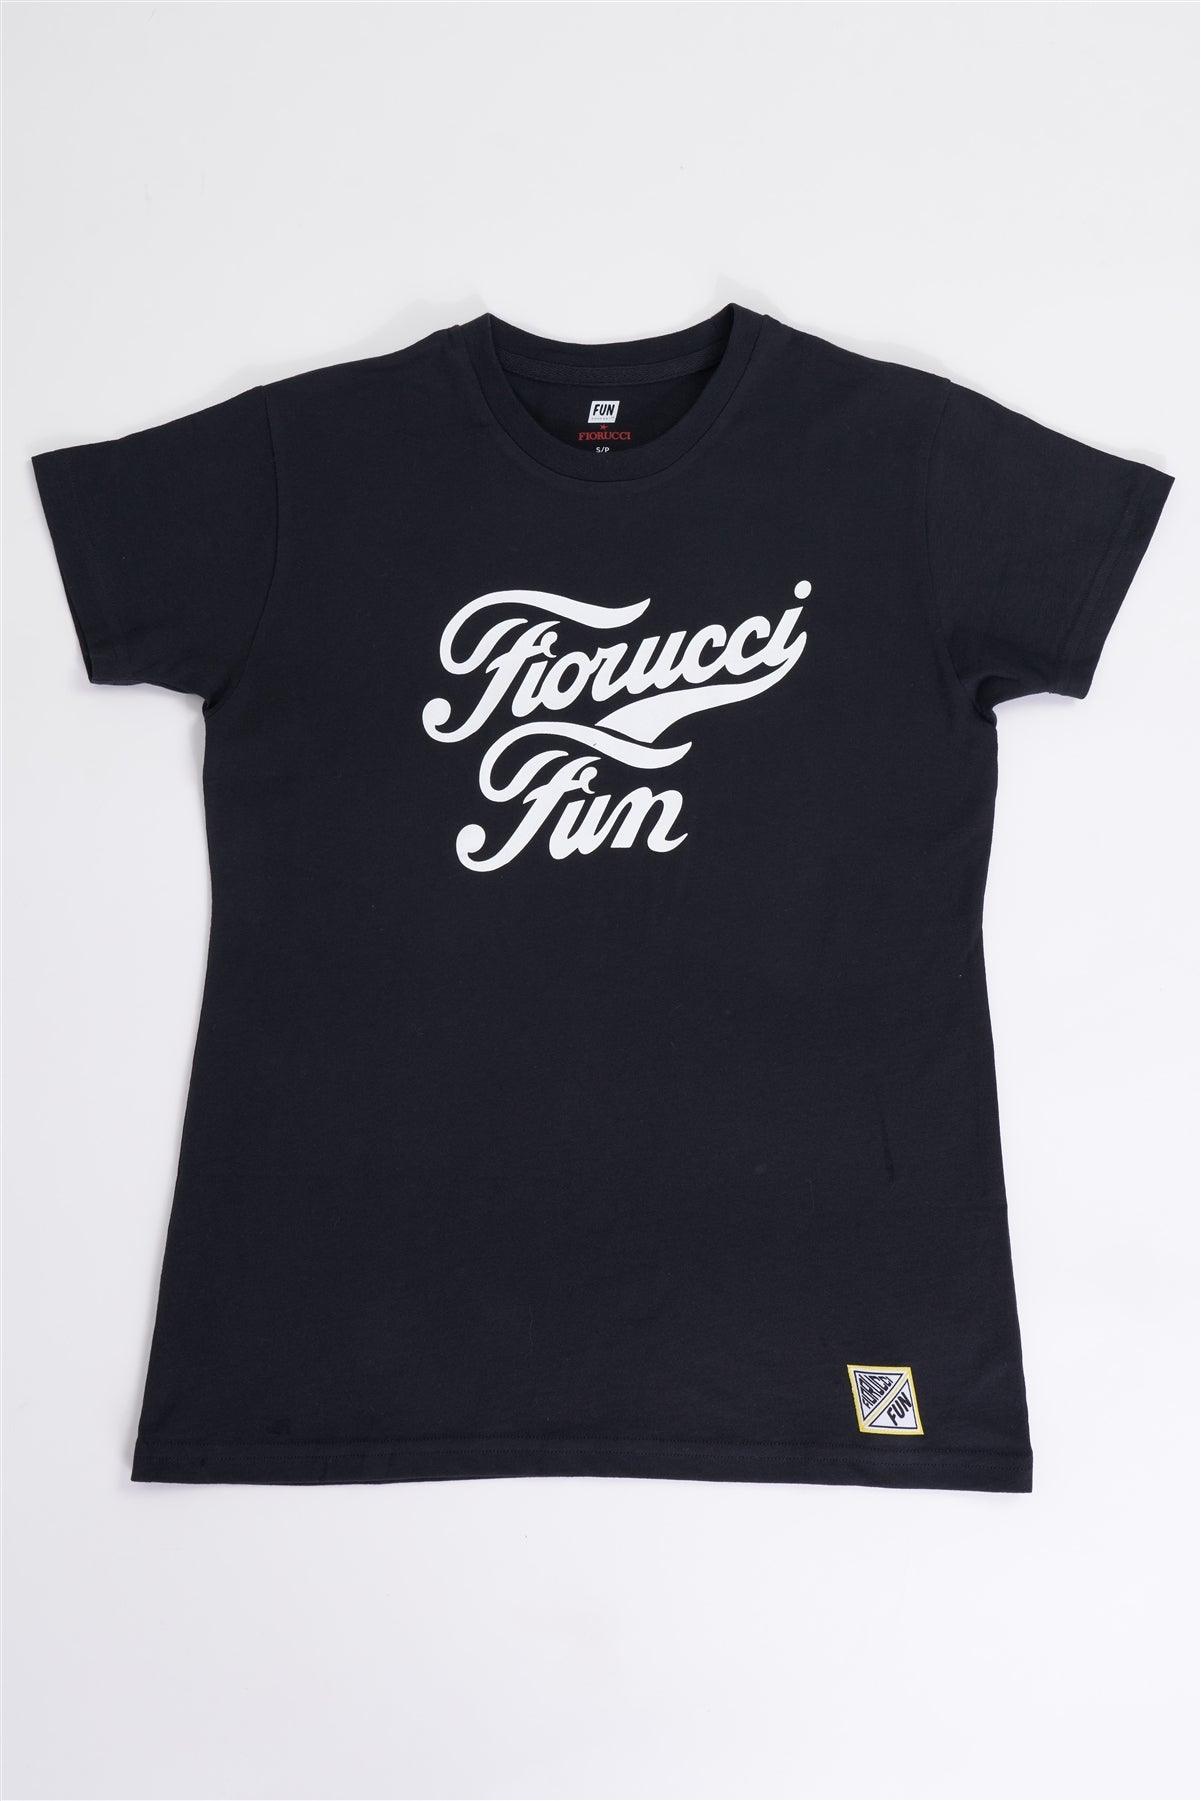 Fiorucci Fun Black & White Printed Logo T-Shirt For Her /2-2-1